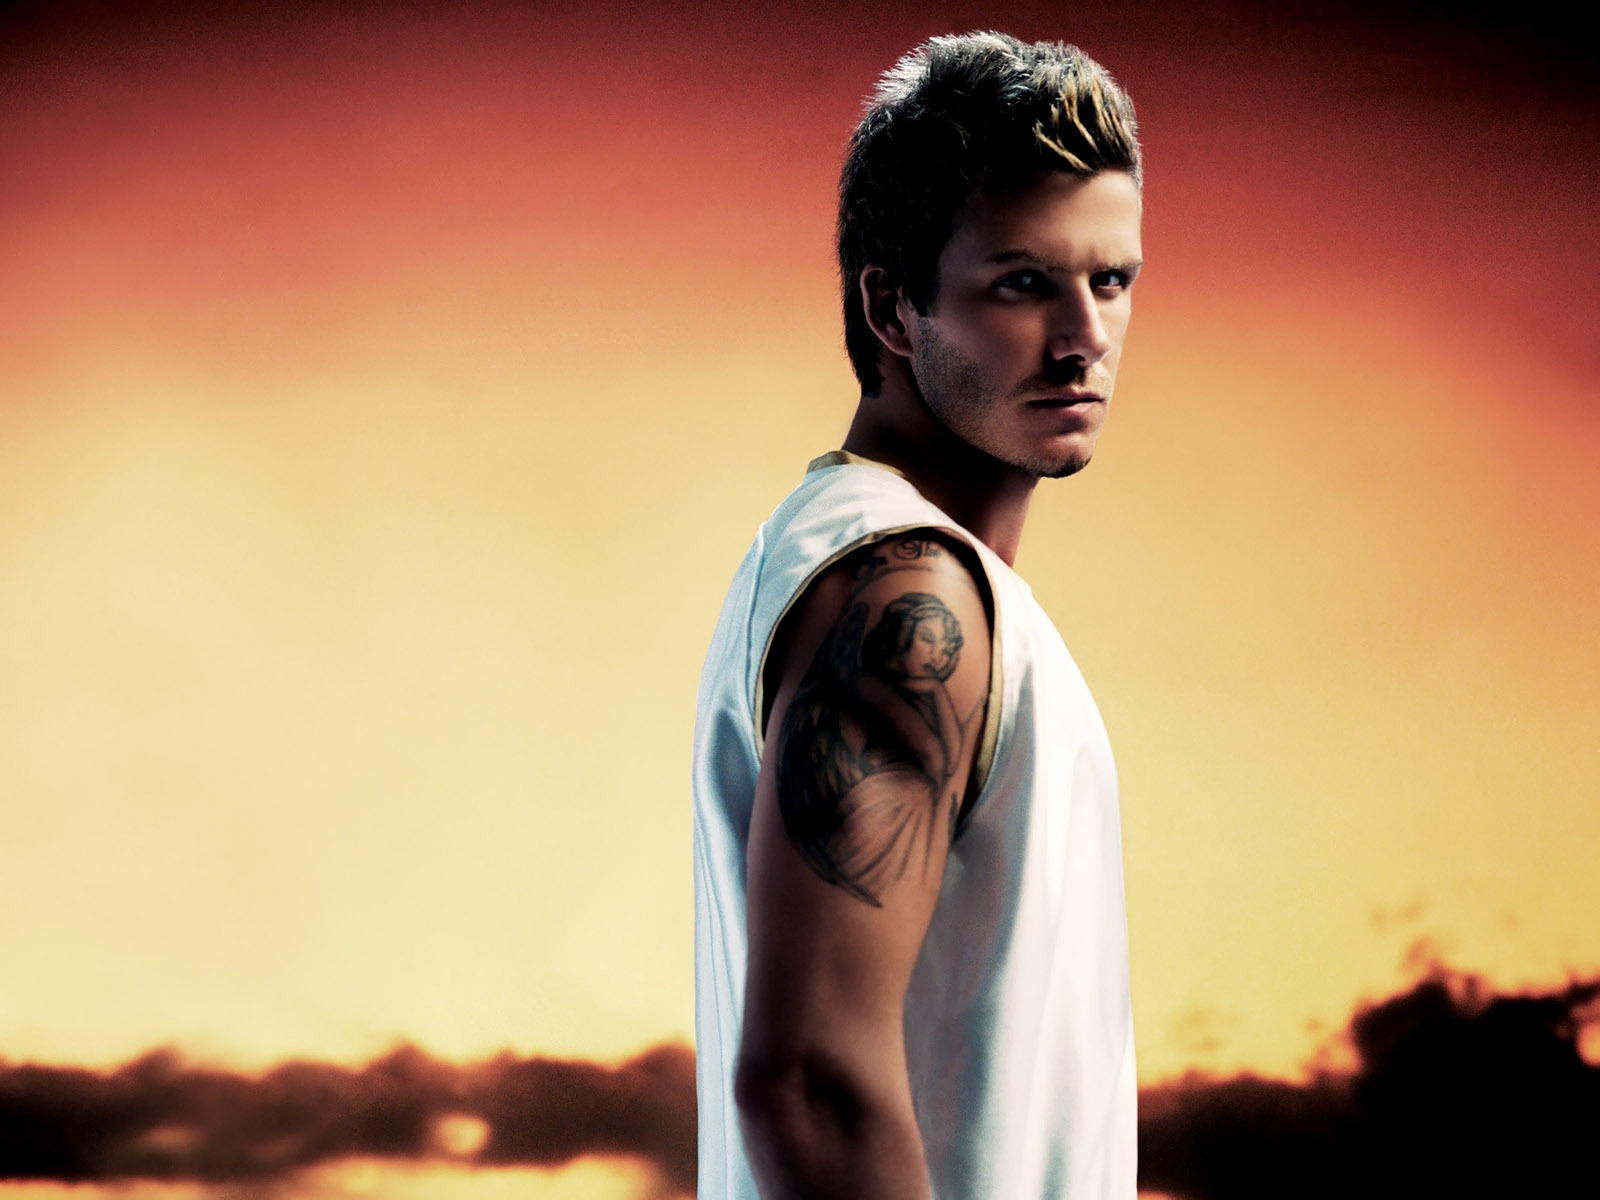 David Beckham Cool for 1600 x 1200 resolution